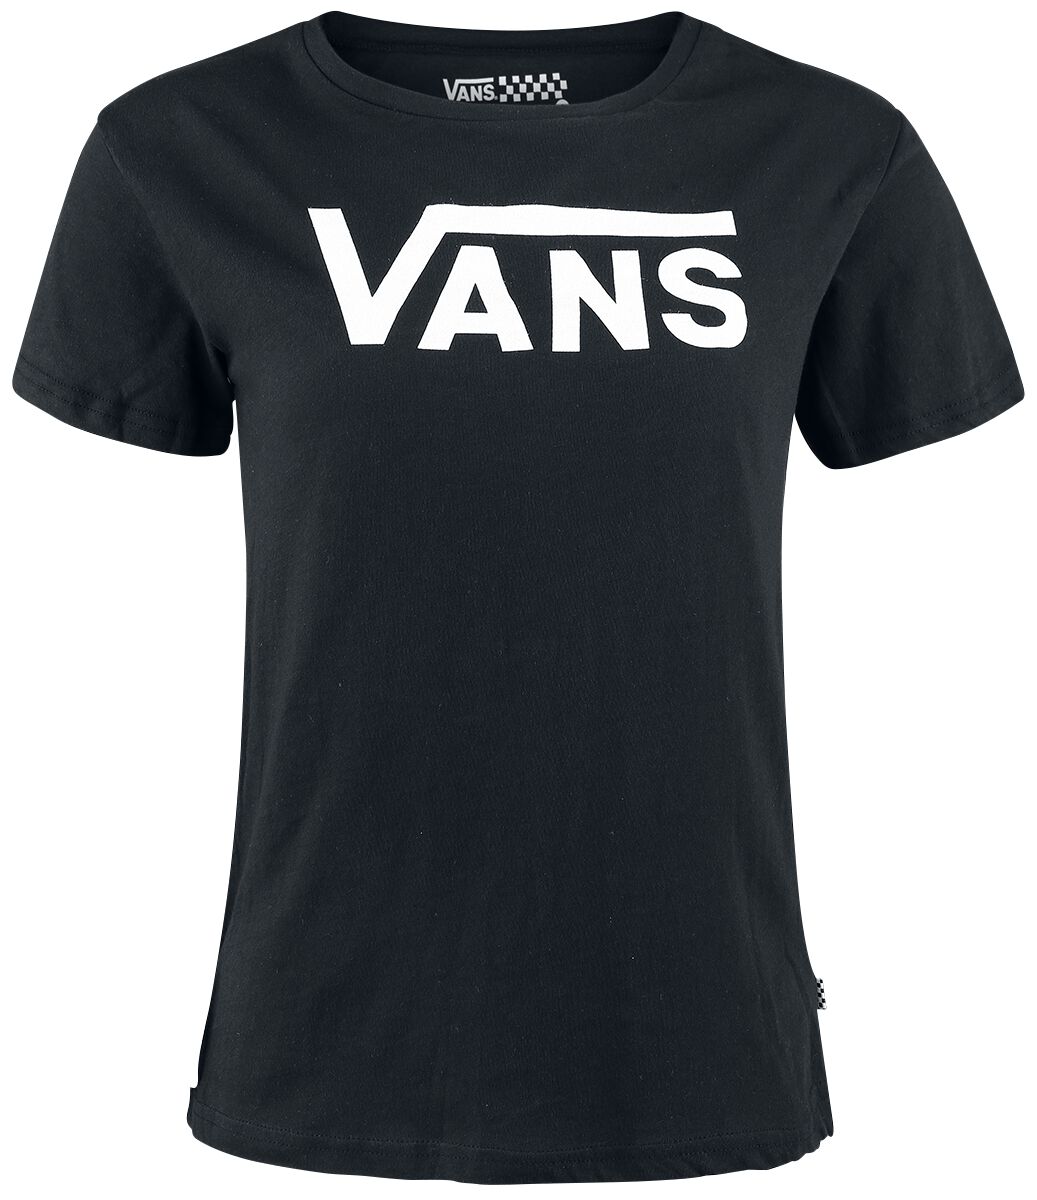 Vans Flying V Crew T-Shirt schwarz in L von Vans